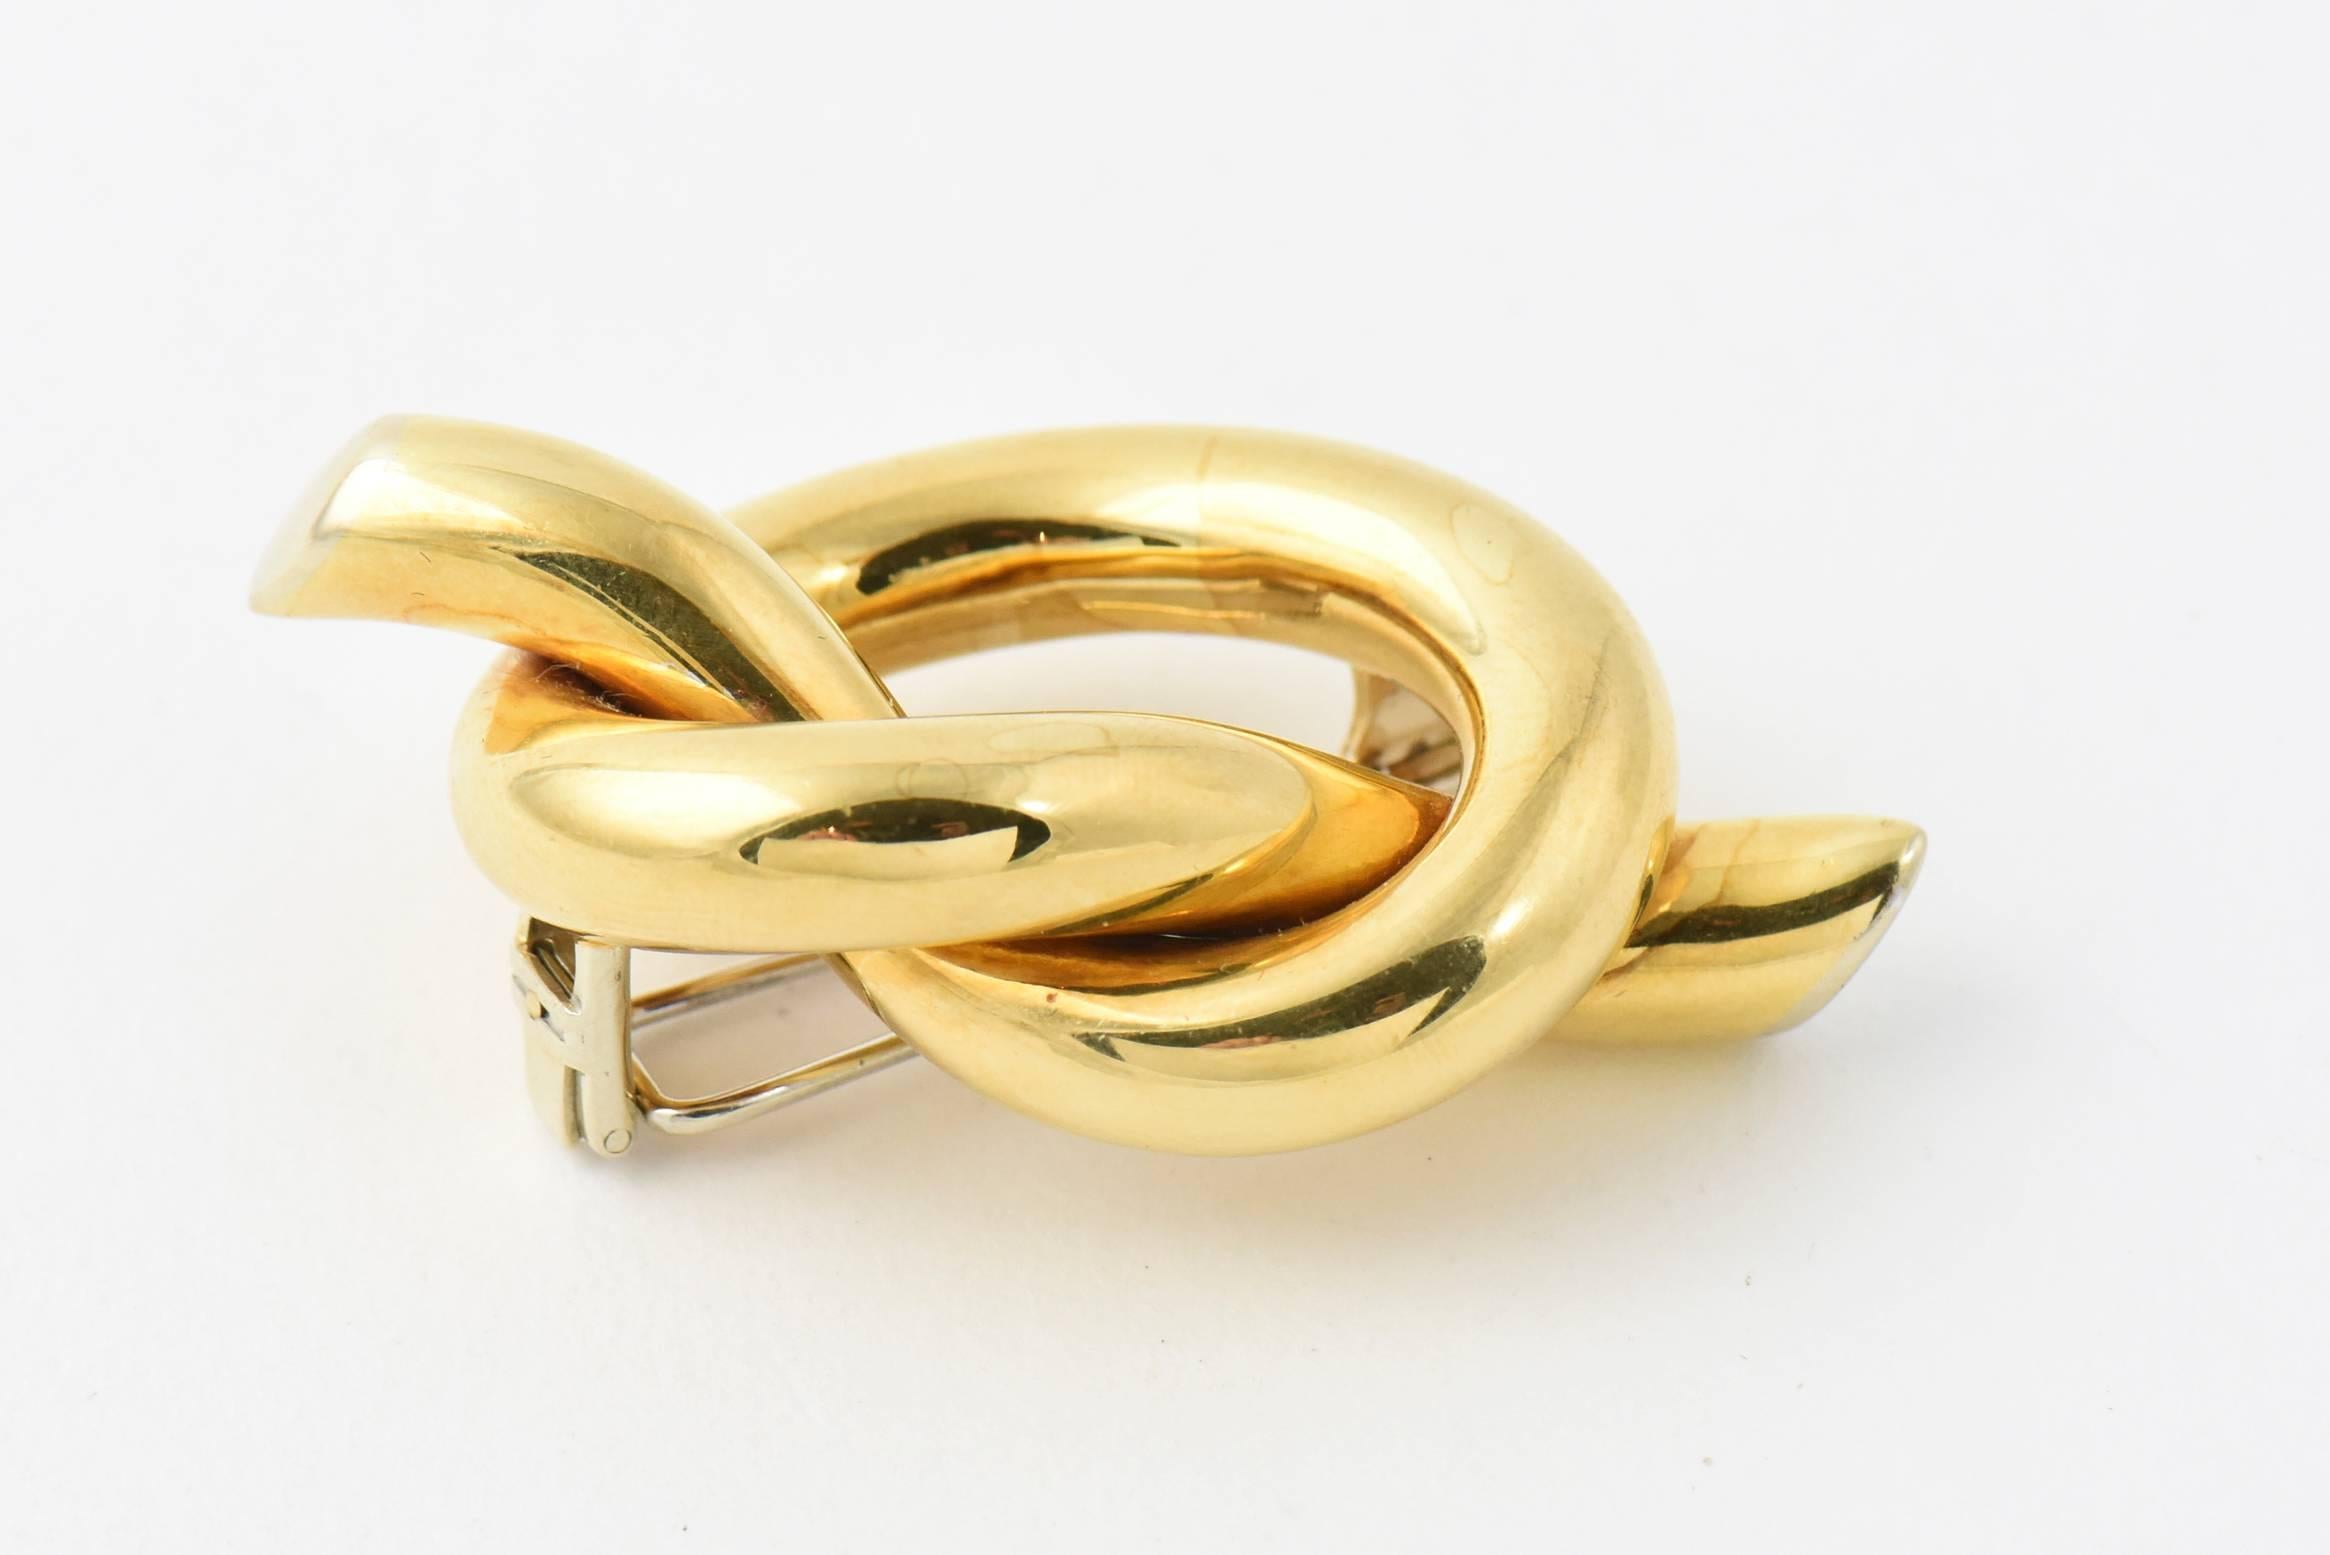 Italian Shiny Finish Mariner Knot Gold Brooch or Pin 1